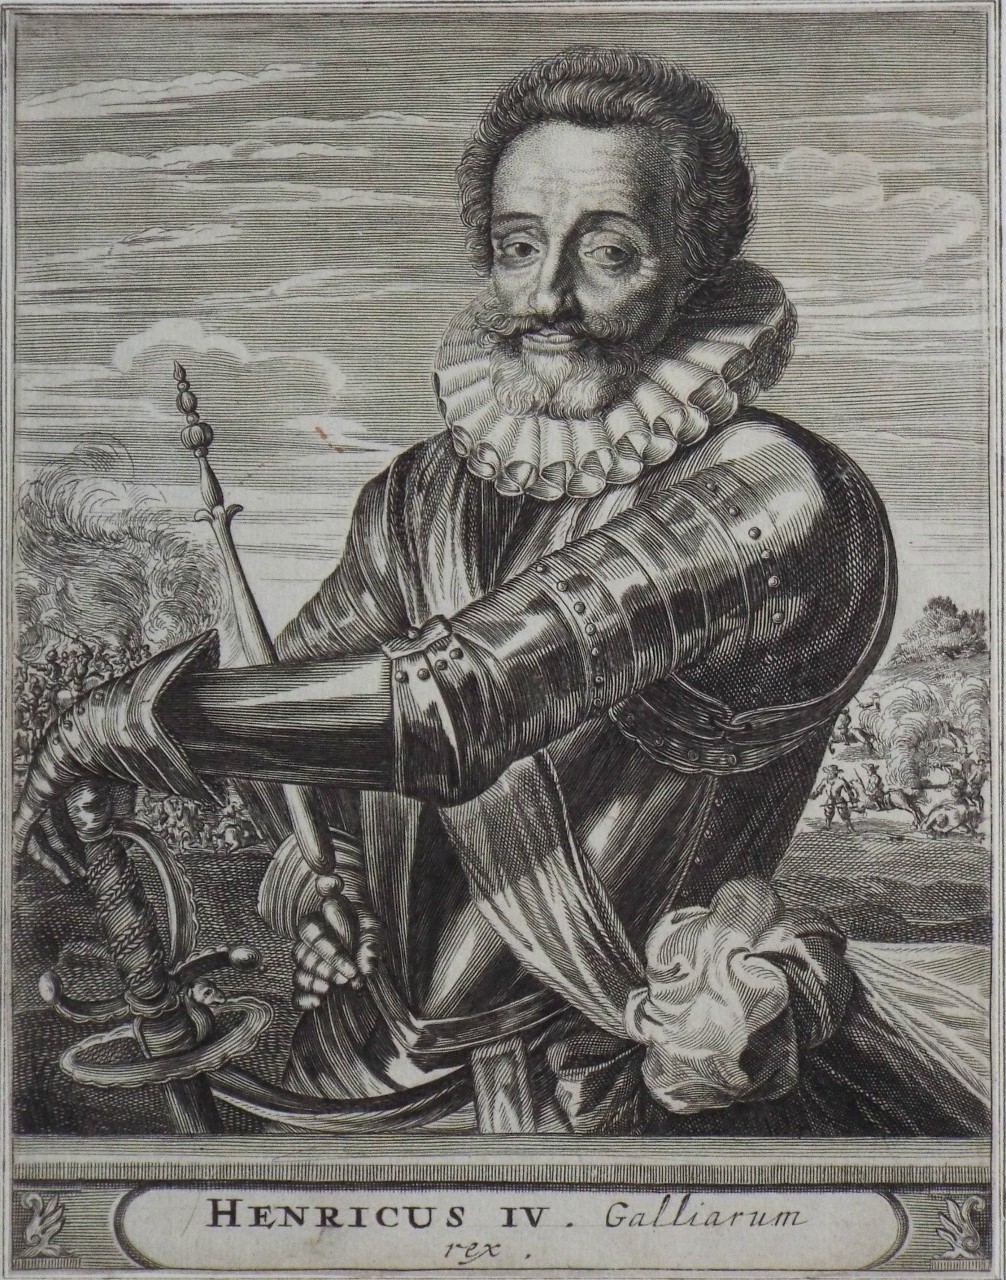 Print - Henricus IV . Galliarum rex .